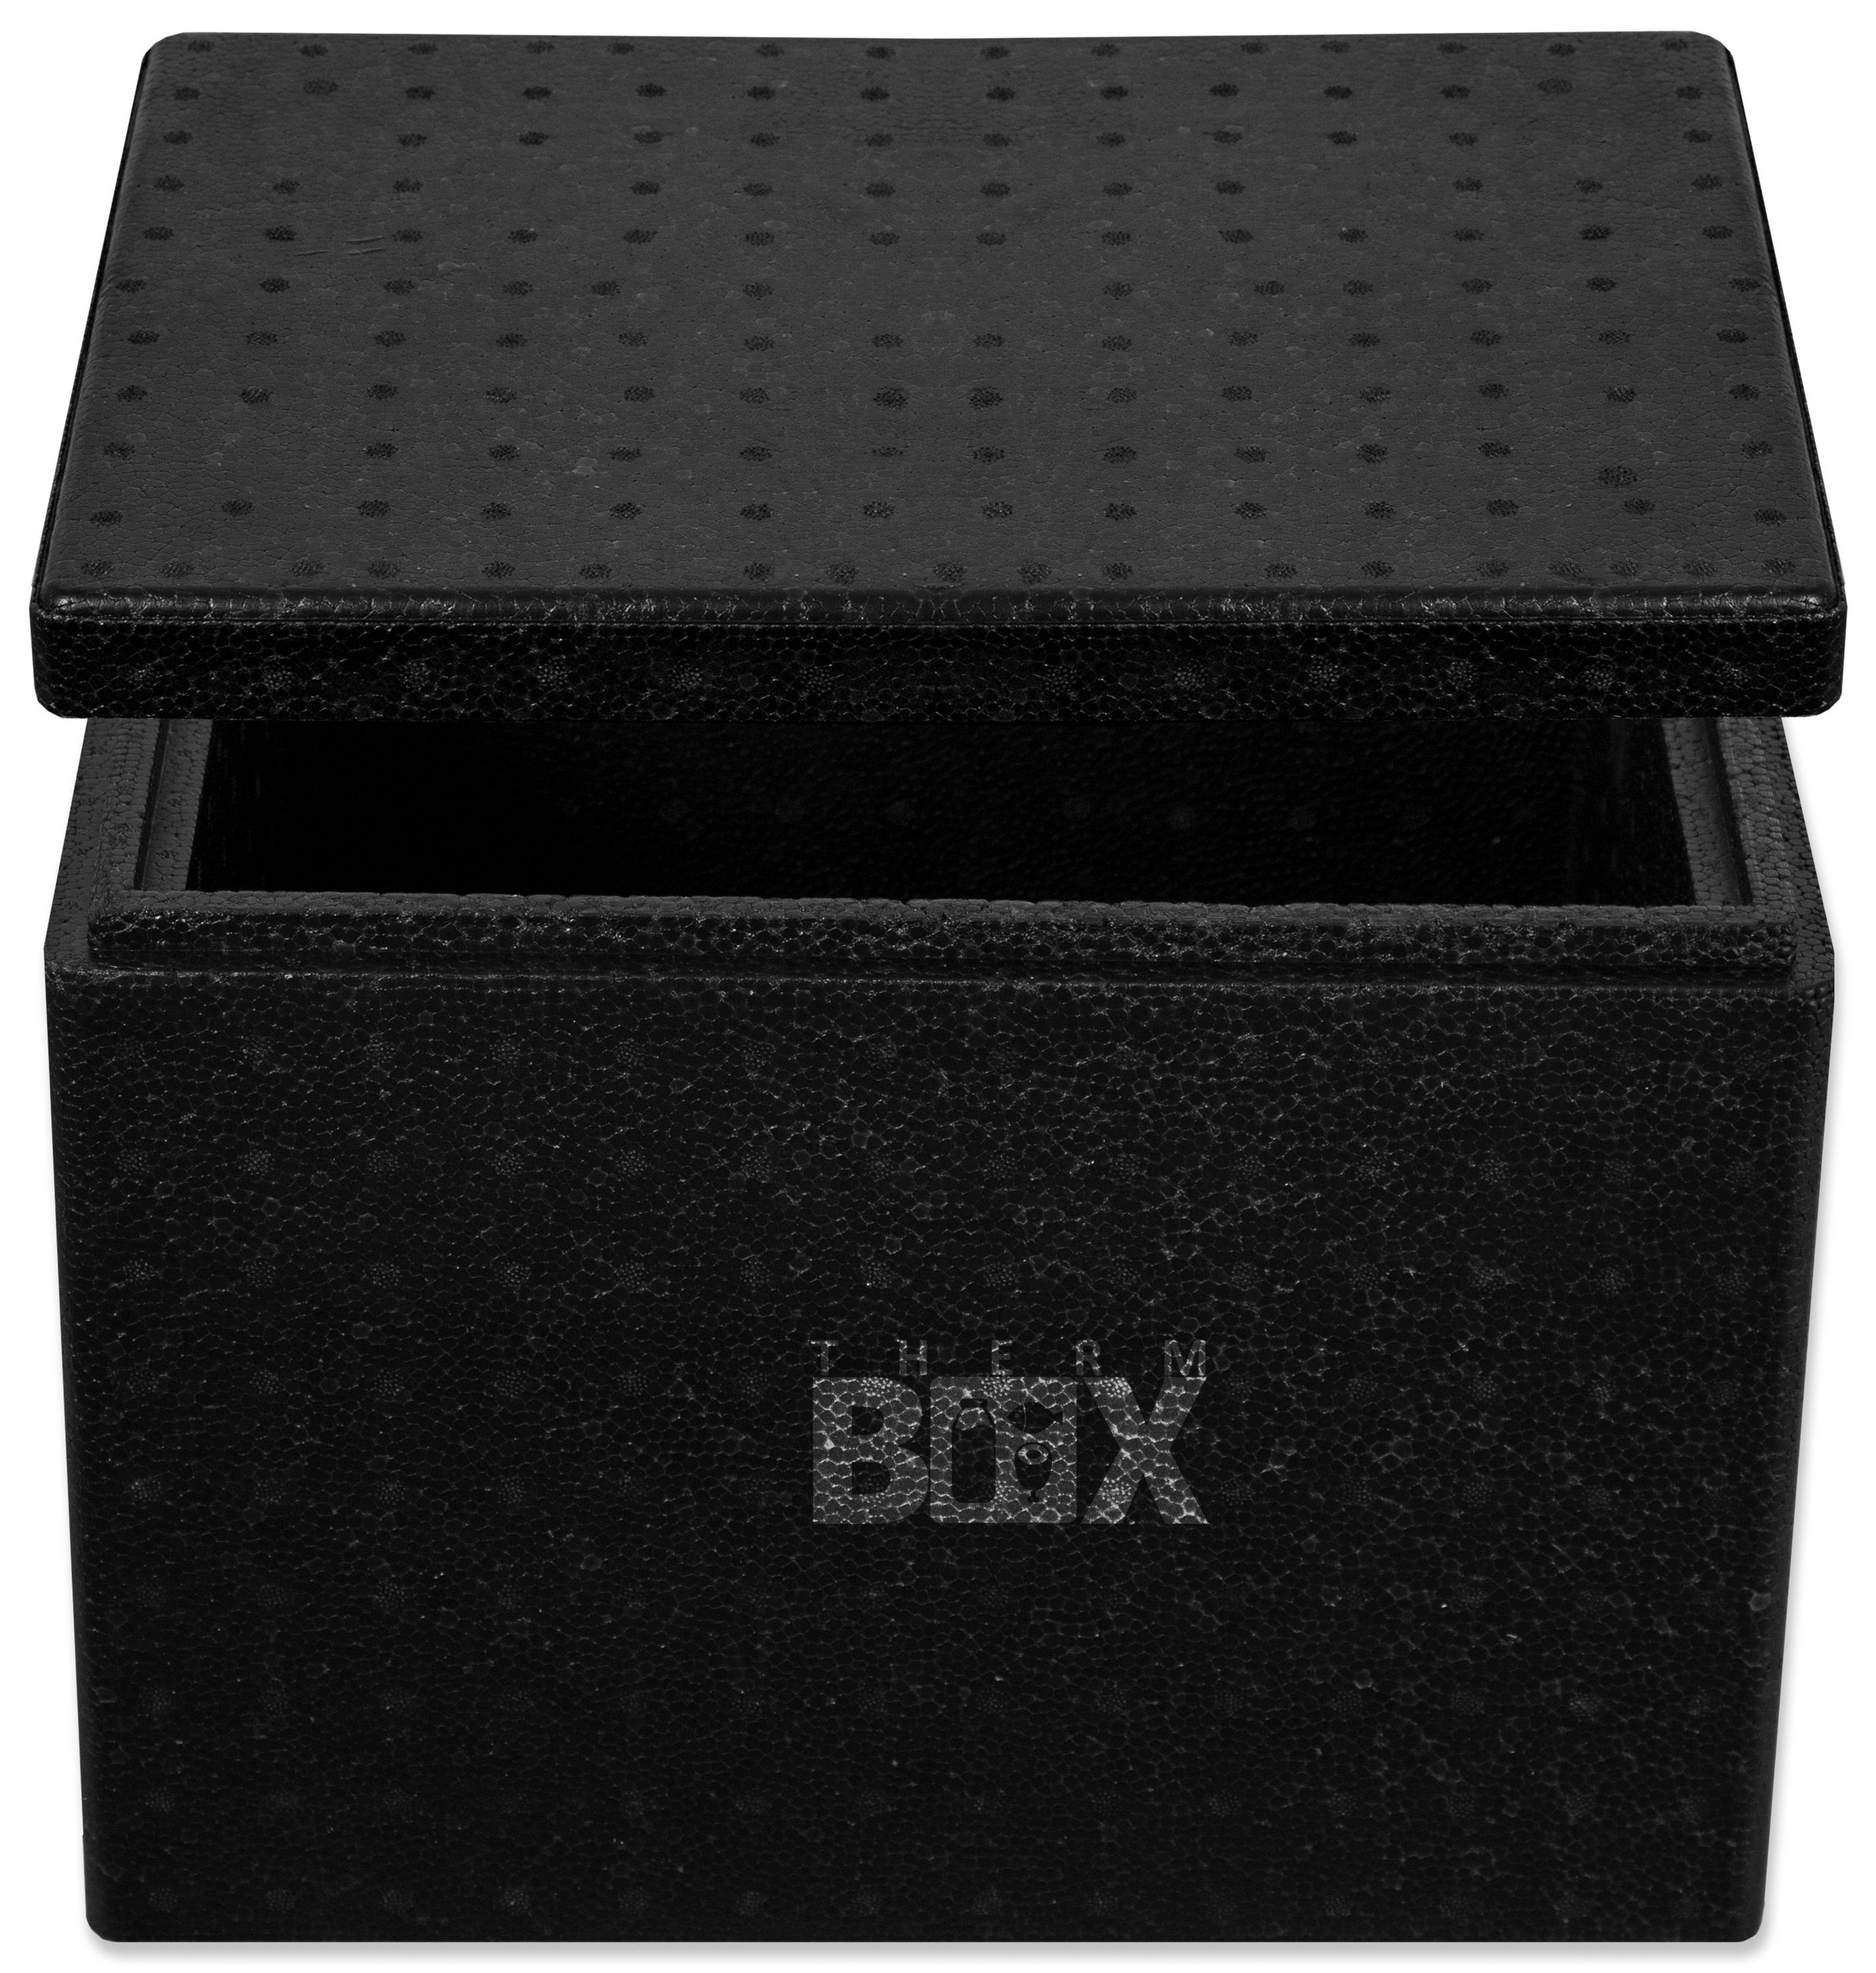 THERM-BOX Thermobehälter Profibox 19B, Styropor-Piocelan, (0-tlg., Box mit  Deckel im Karton), Wand: 3,0cm Volumen: 19,4L Innenmaß:34x23x24cm  Wiederverwendbar Isolierbox Thermobox Kühlbox Warmhaltebox Styroporbox